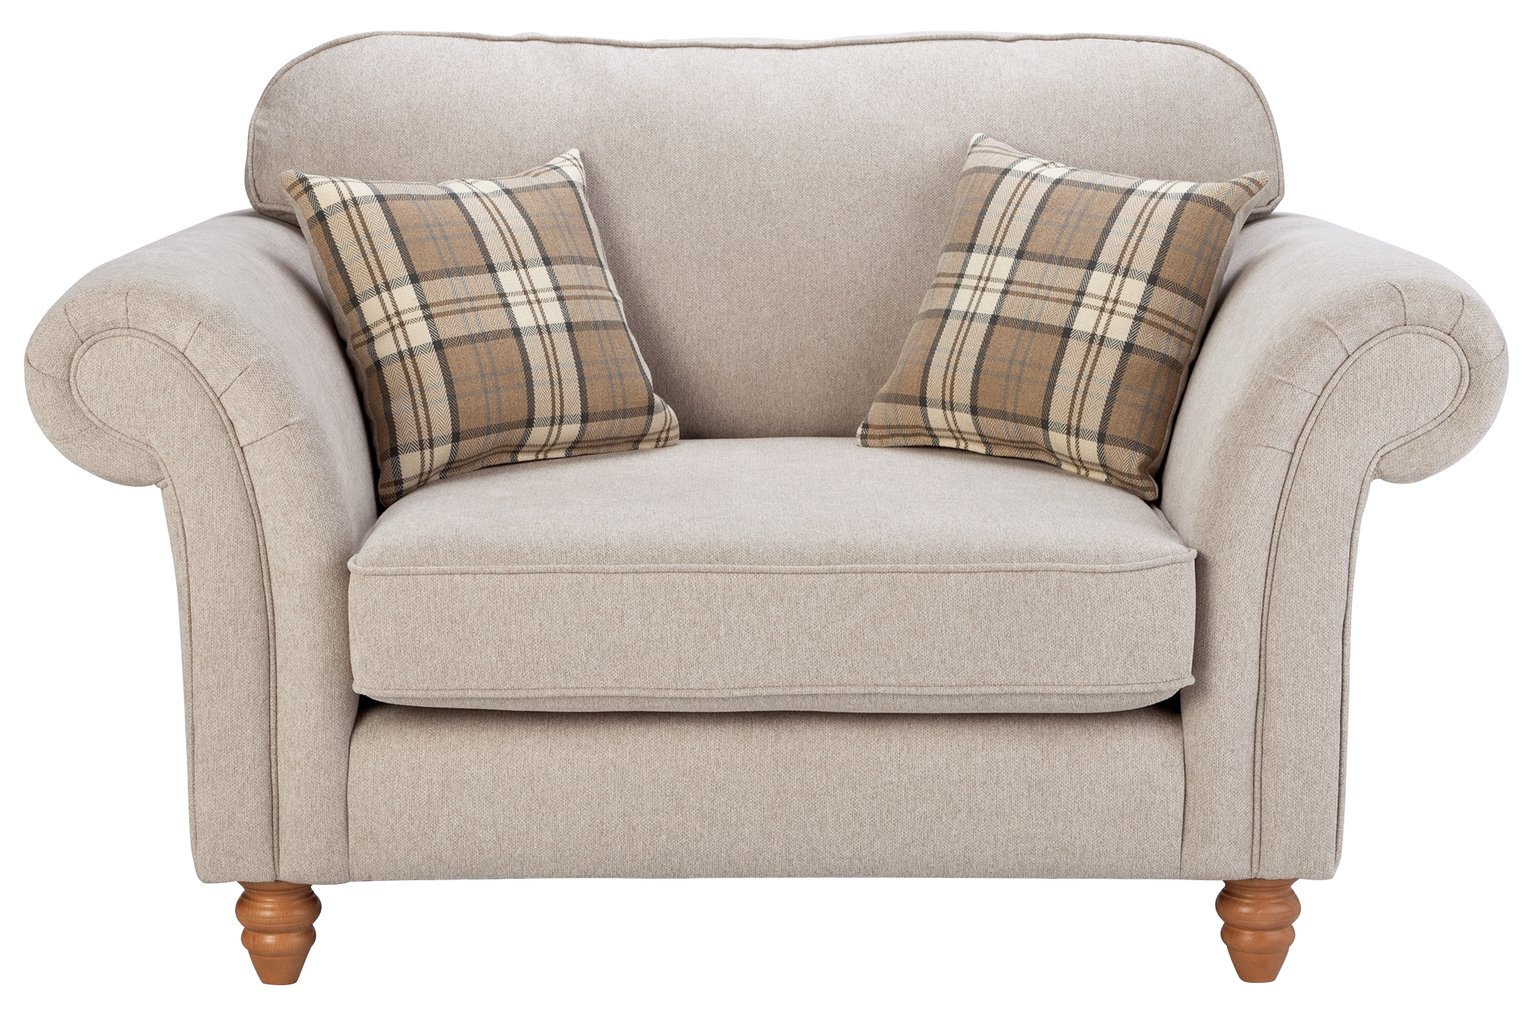 Argos Home New Windsor Fabric Cuddle Chair - Beige